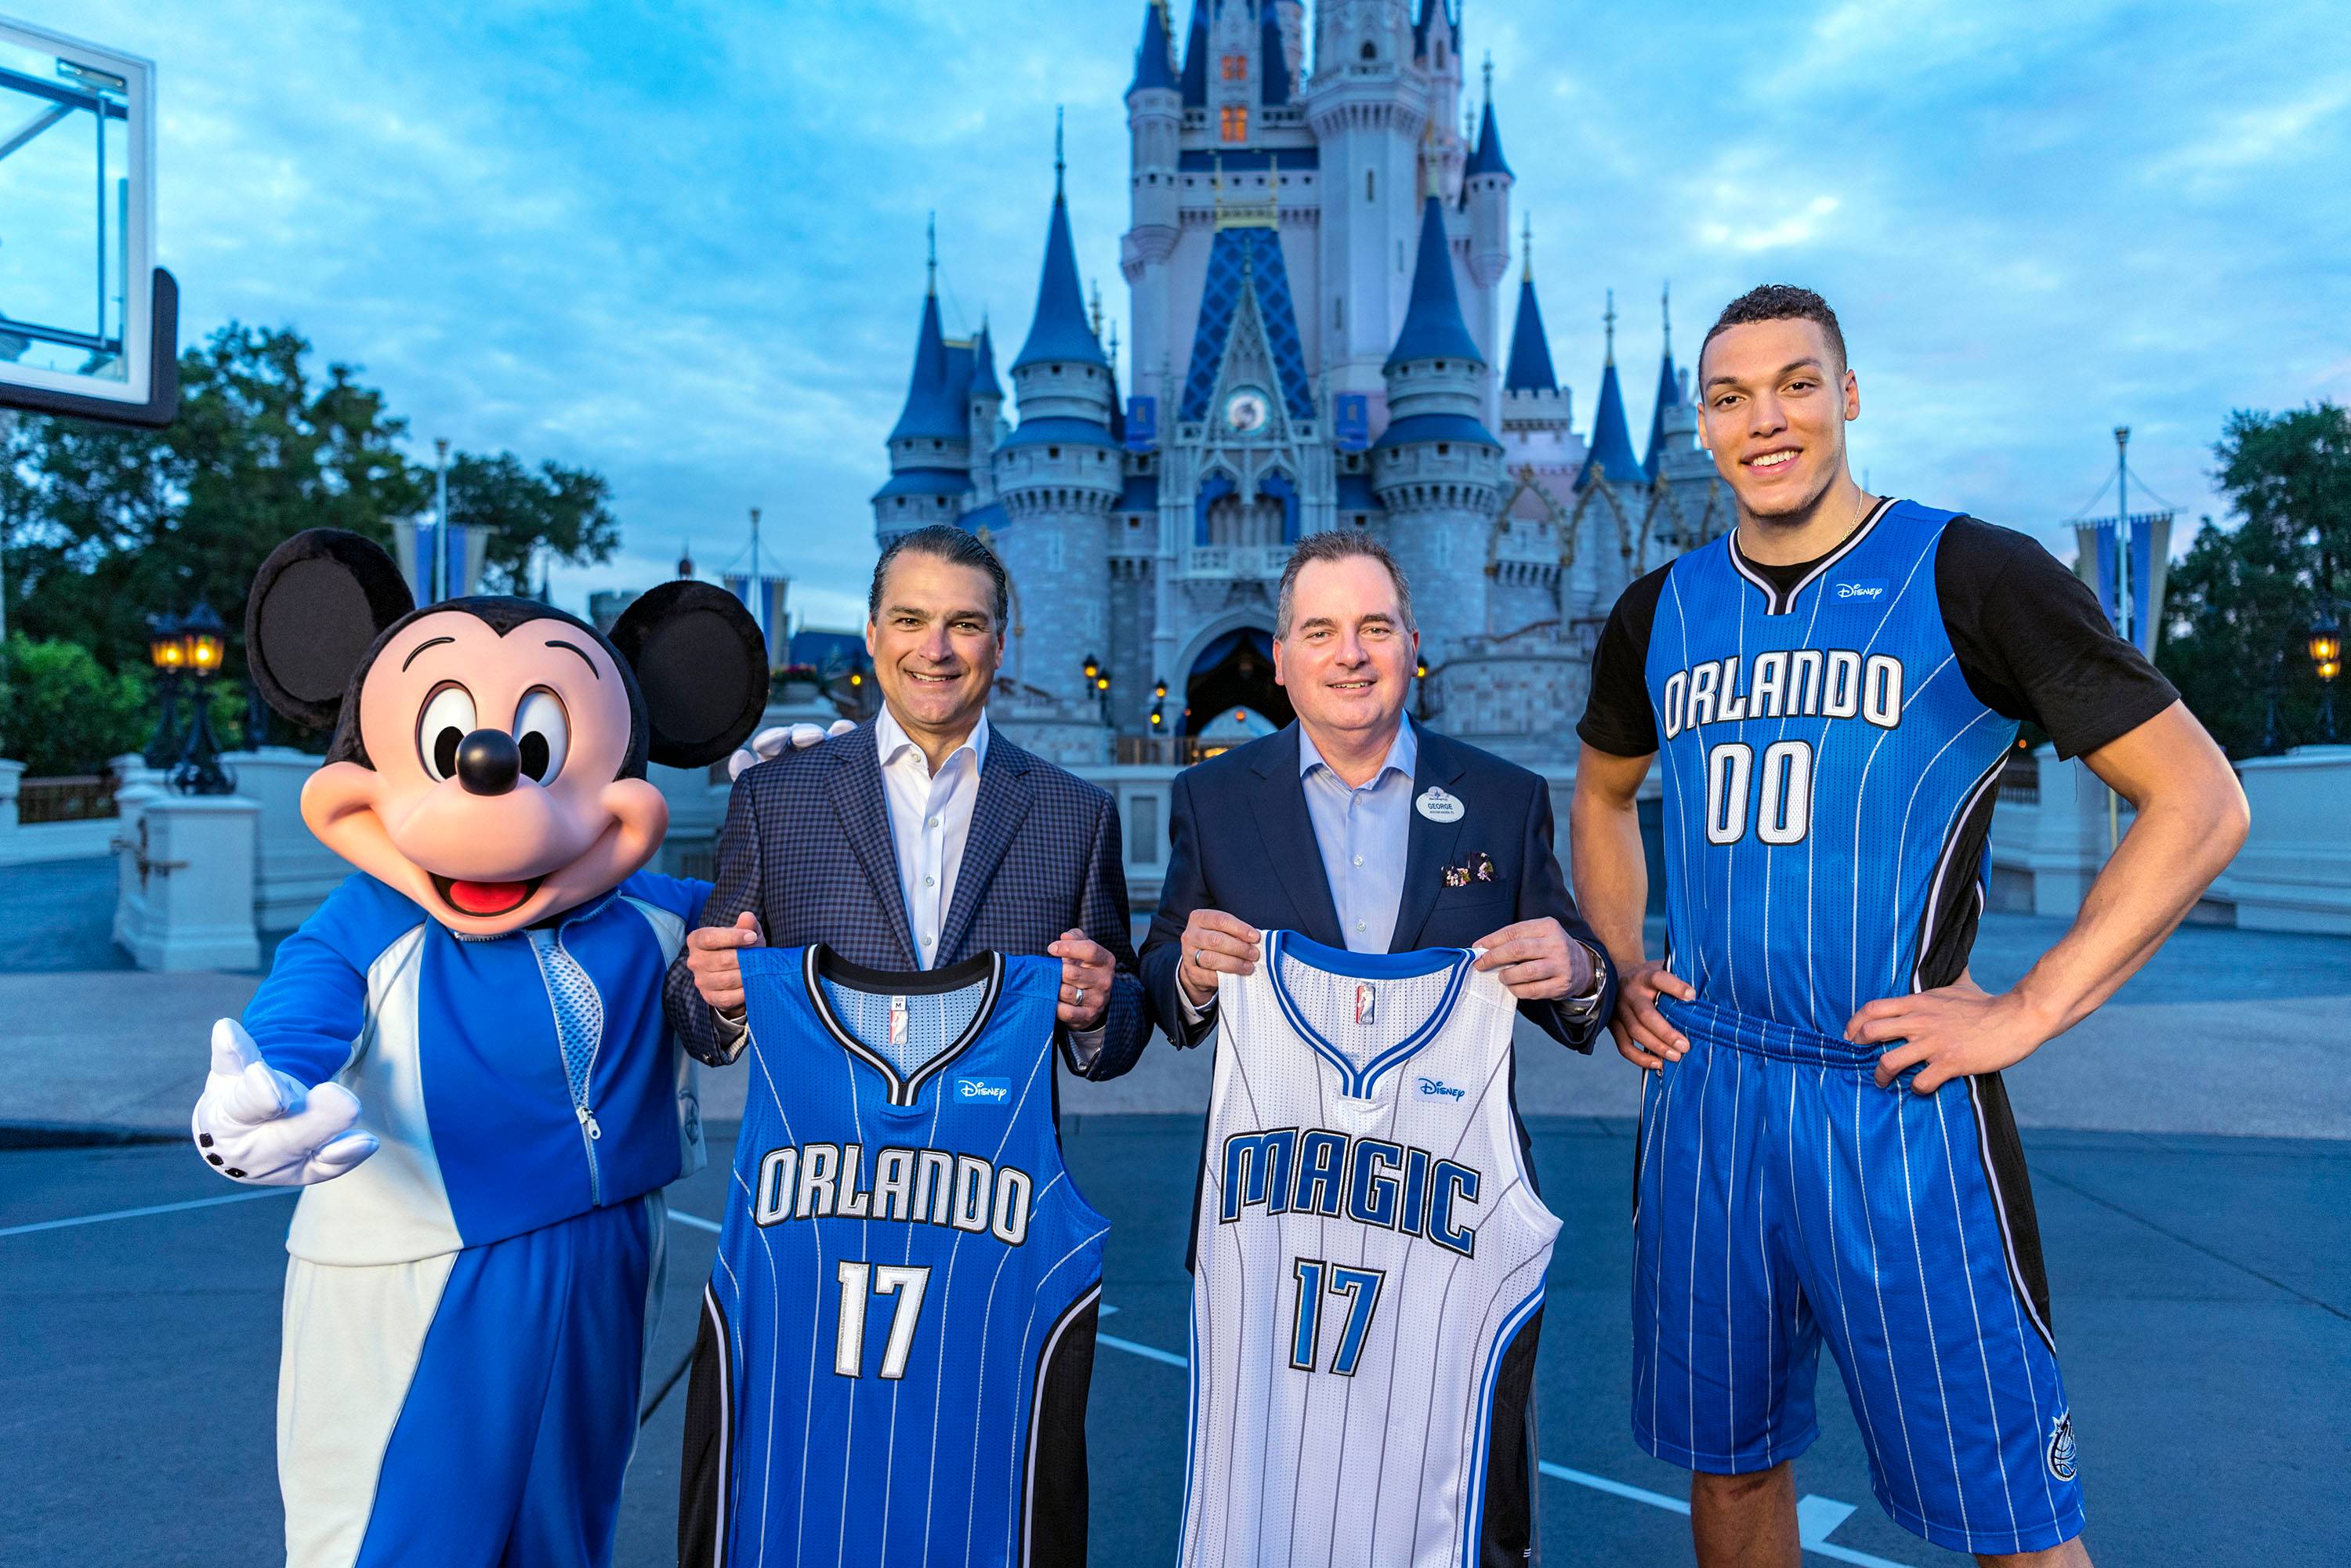 Walt Disney World Resort Orlando Magic jersey sponsorship